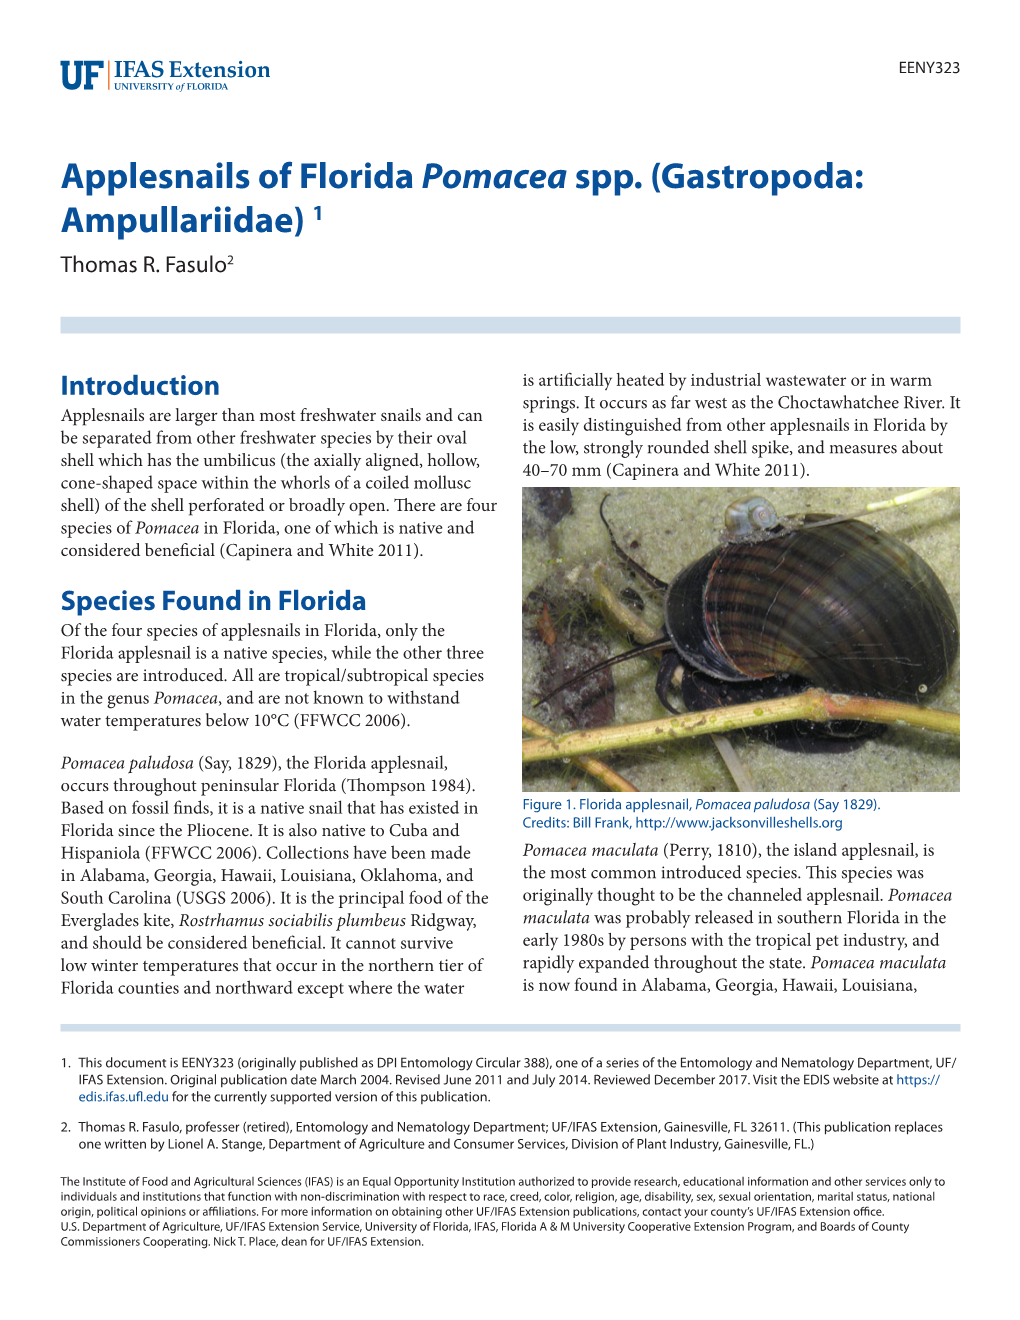 Applesnails of Florida Pomacea Spp. (Gastropoda: Ampullariidae) 1 Thomas R